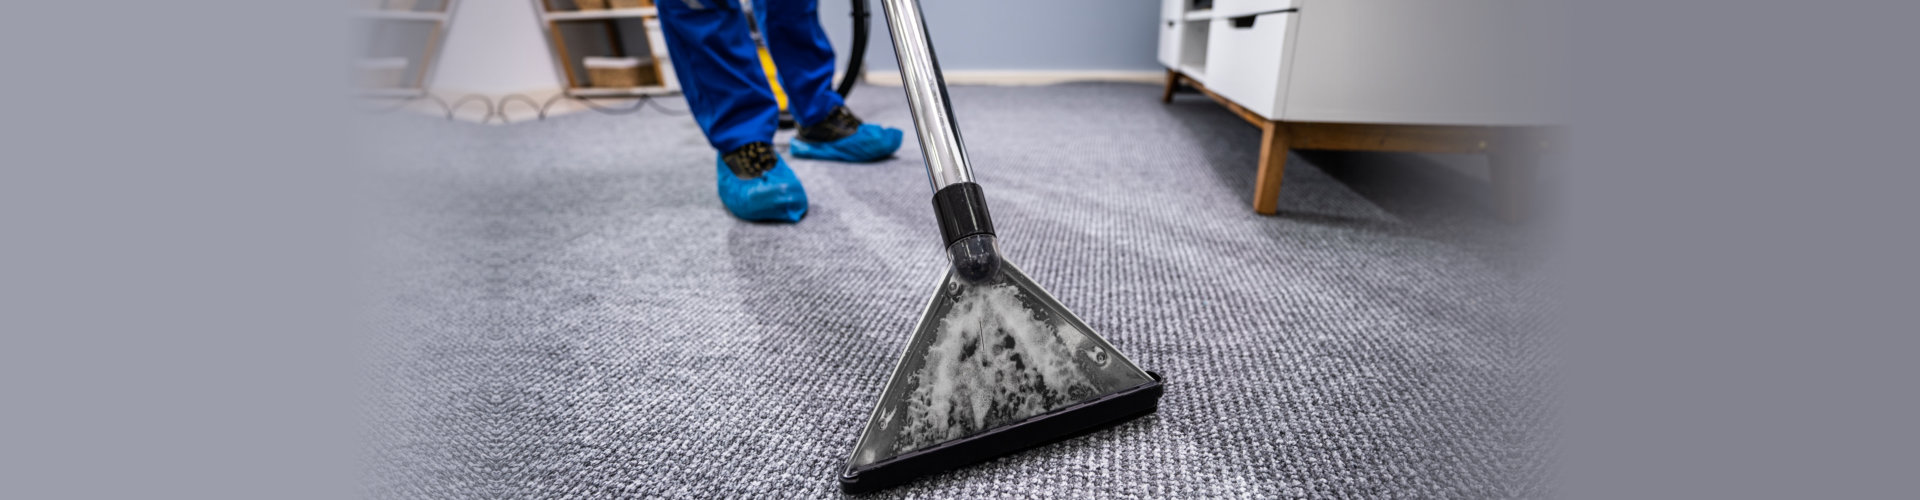 floor mat being cleaned